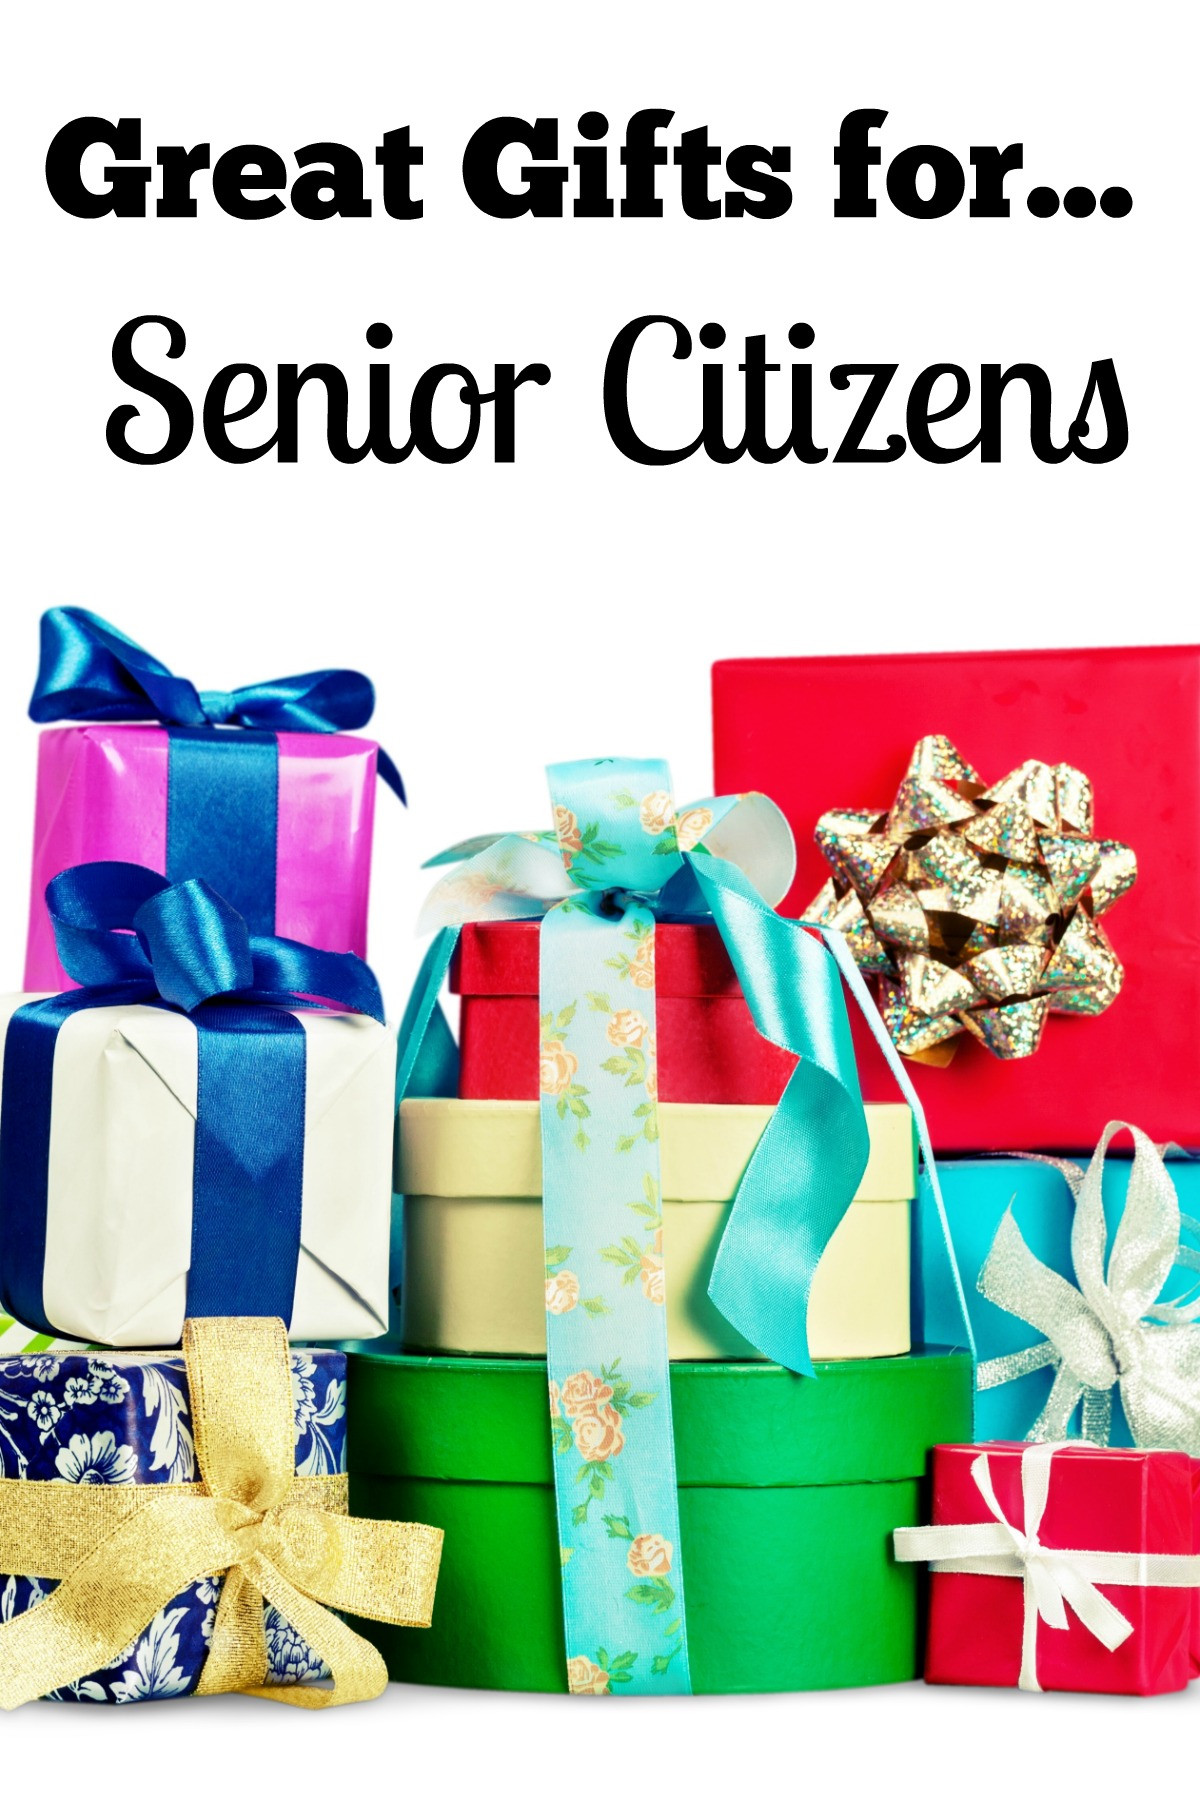 Gift Basket Ideas For Senior Citizens
 Great Gifts For Senior Citizens